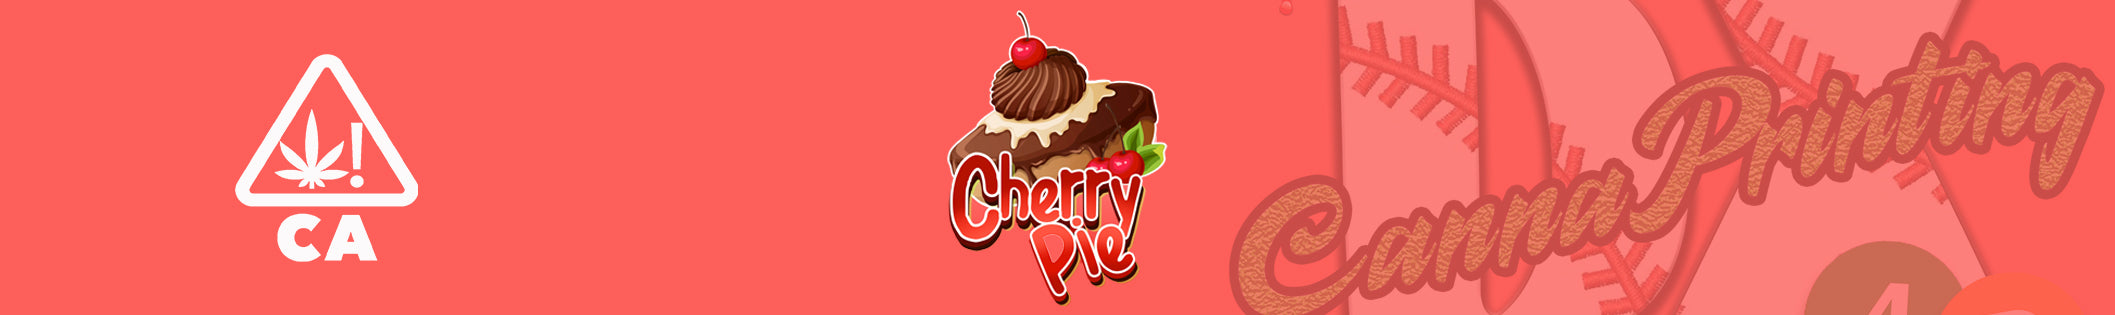 Cherry Pie - 3Oz